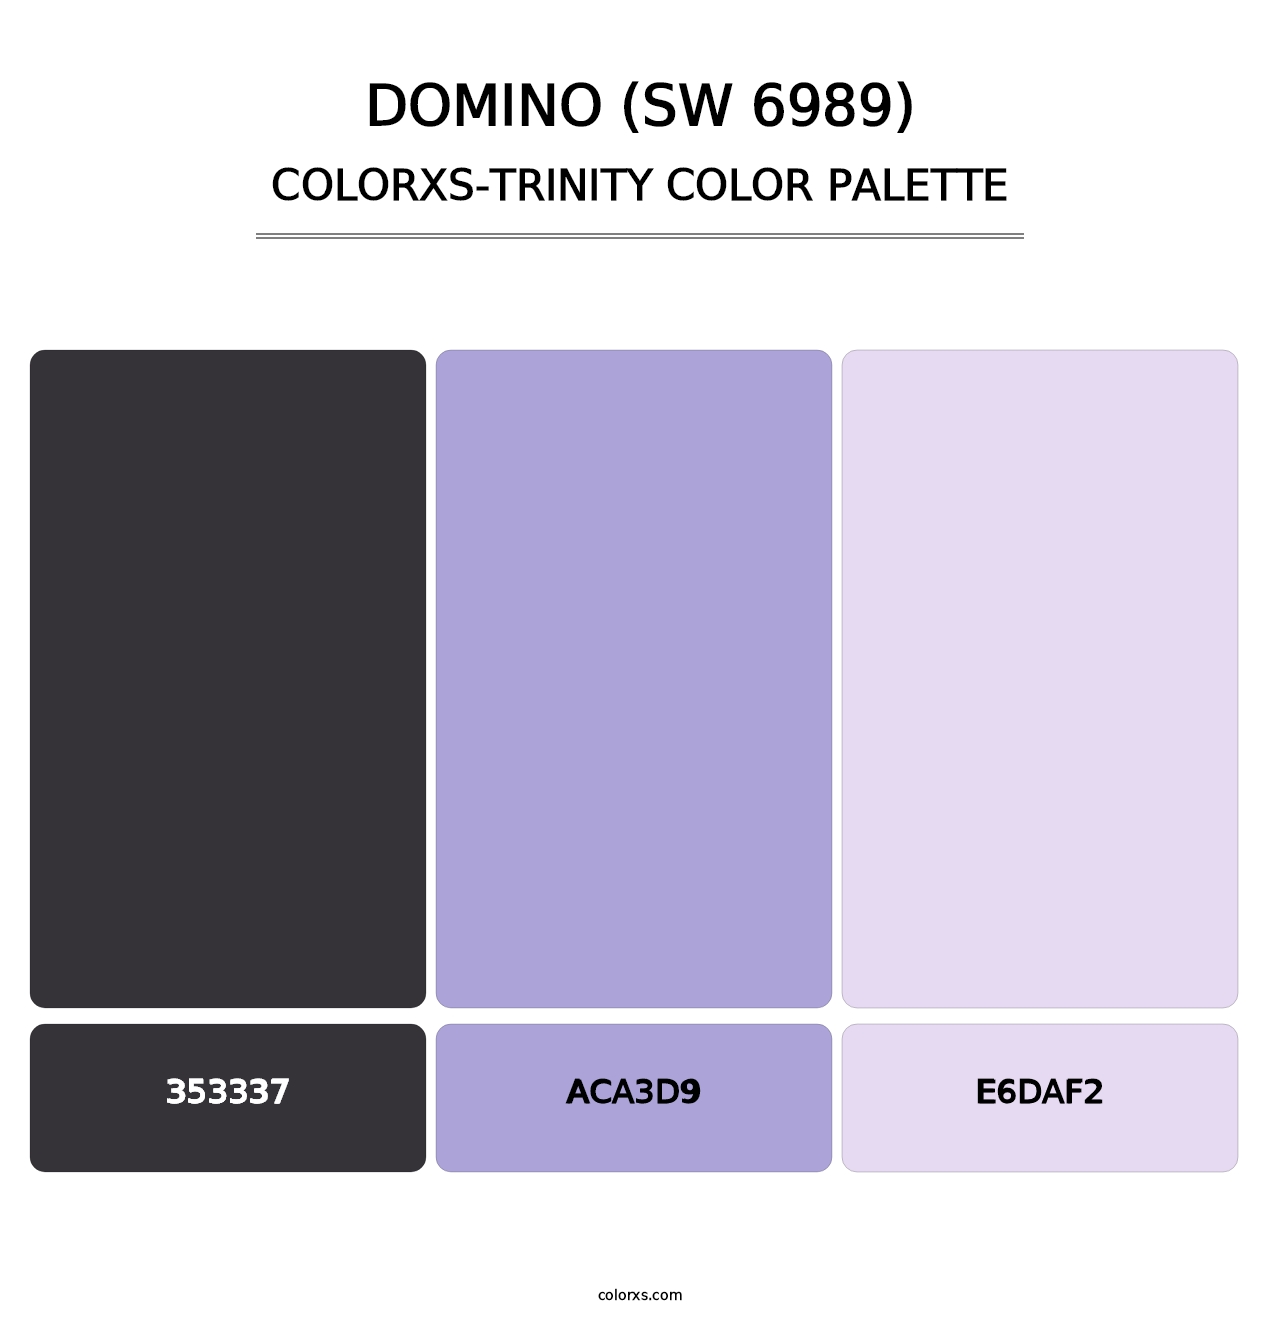 Domino (SW 6989) - Colorxs Trinity Palette